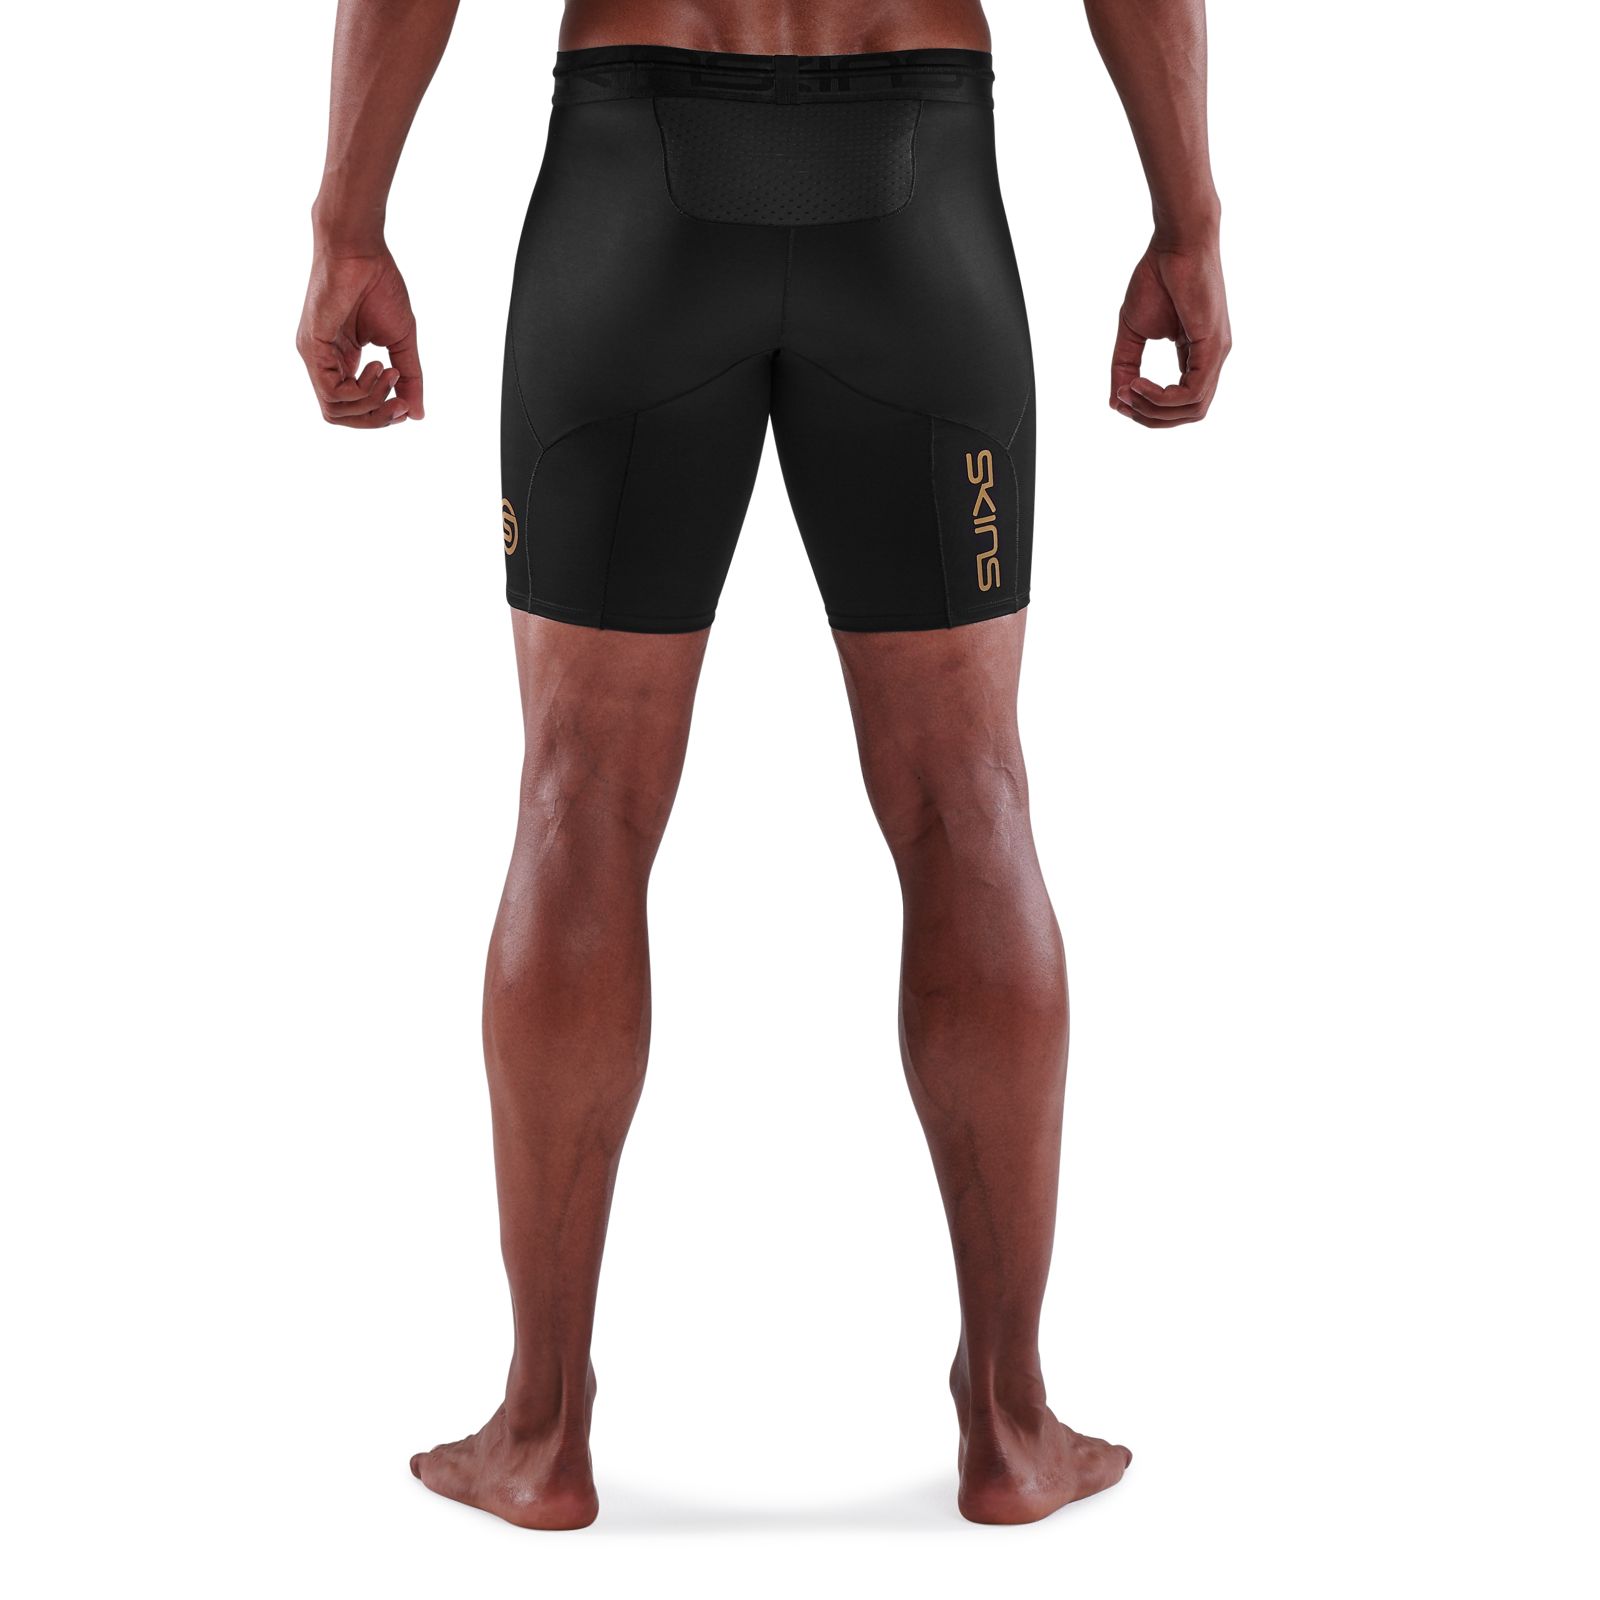 Skins Dnamic Force Mens Compression Shorts (Black) - Olympus Sports